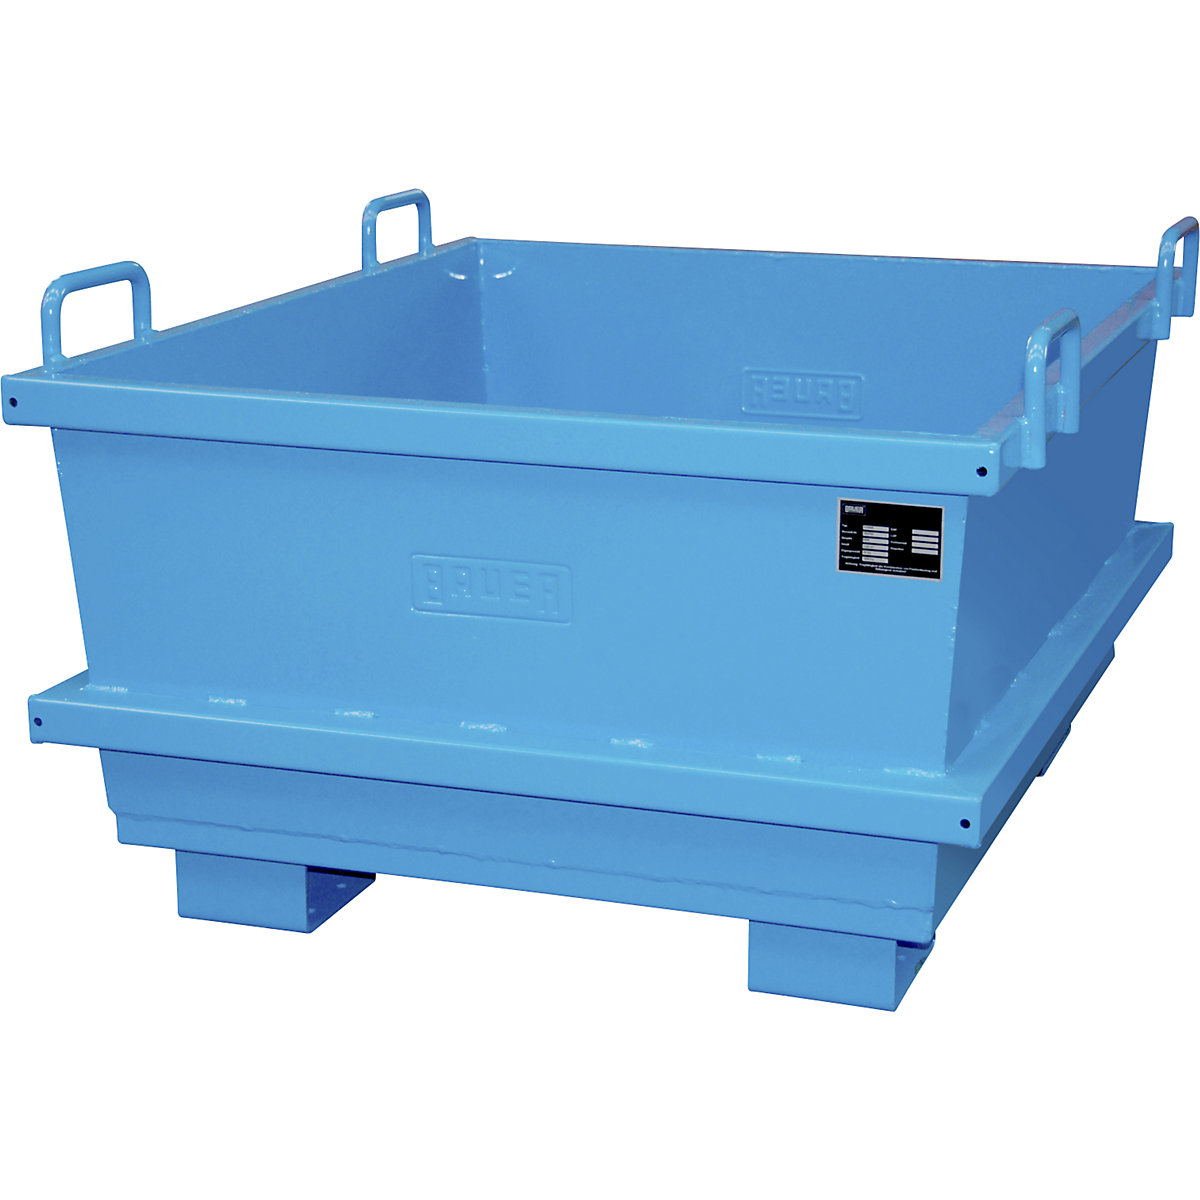 Container universal – eurokraft pro, volum 0,5 m³, albastru deschis